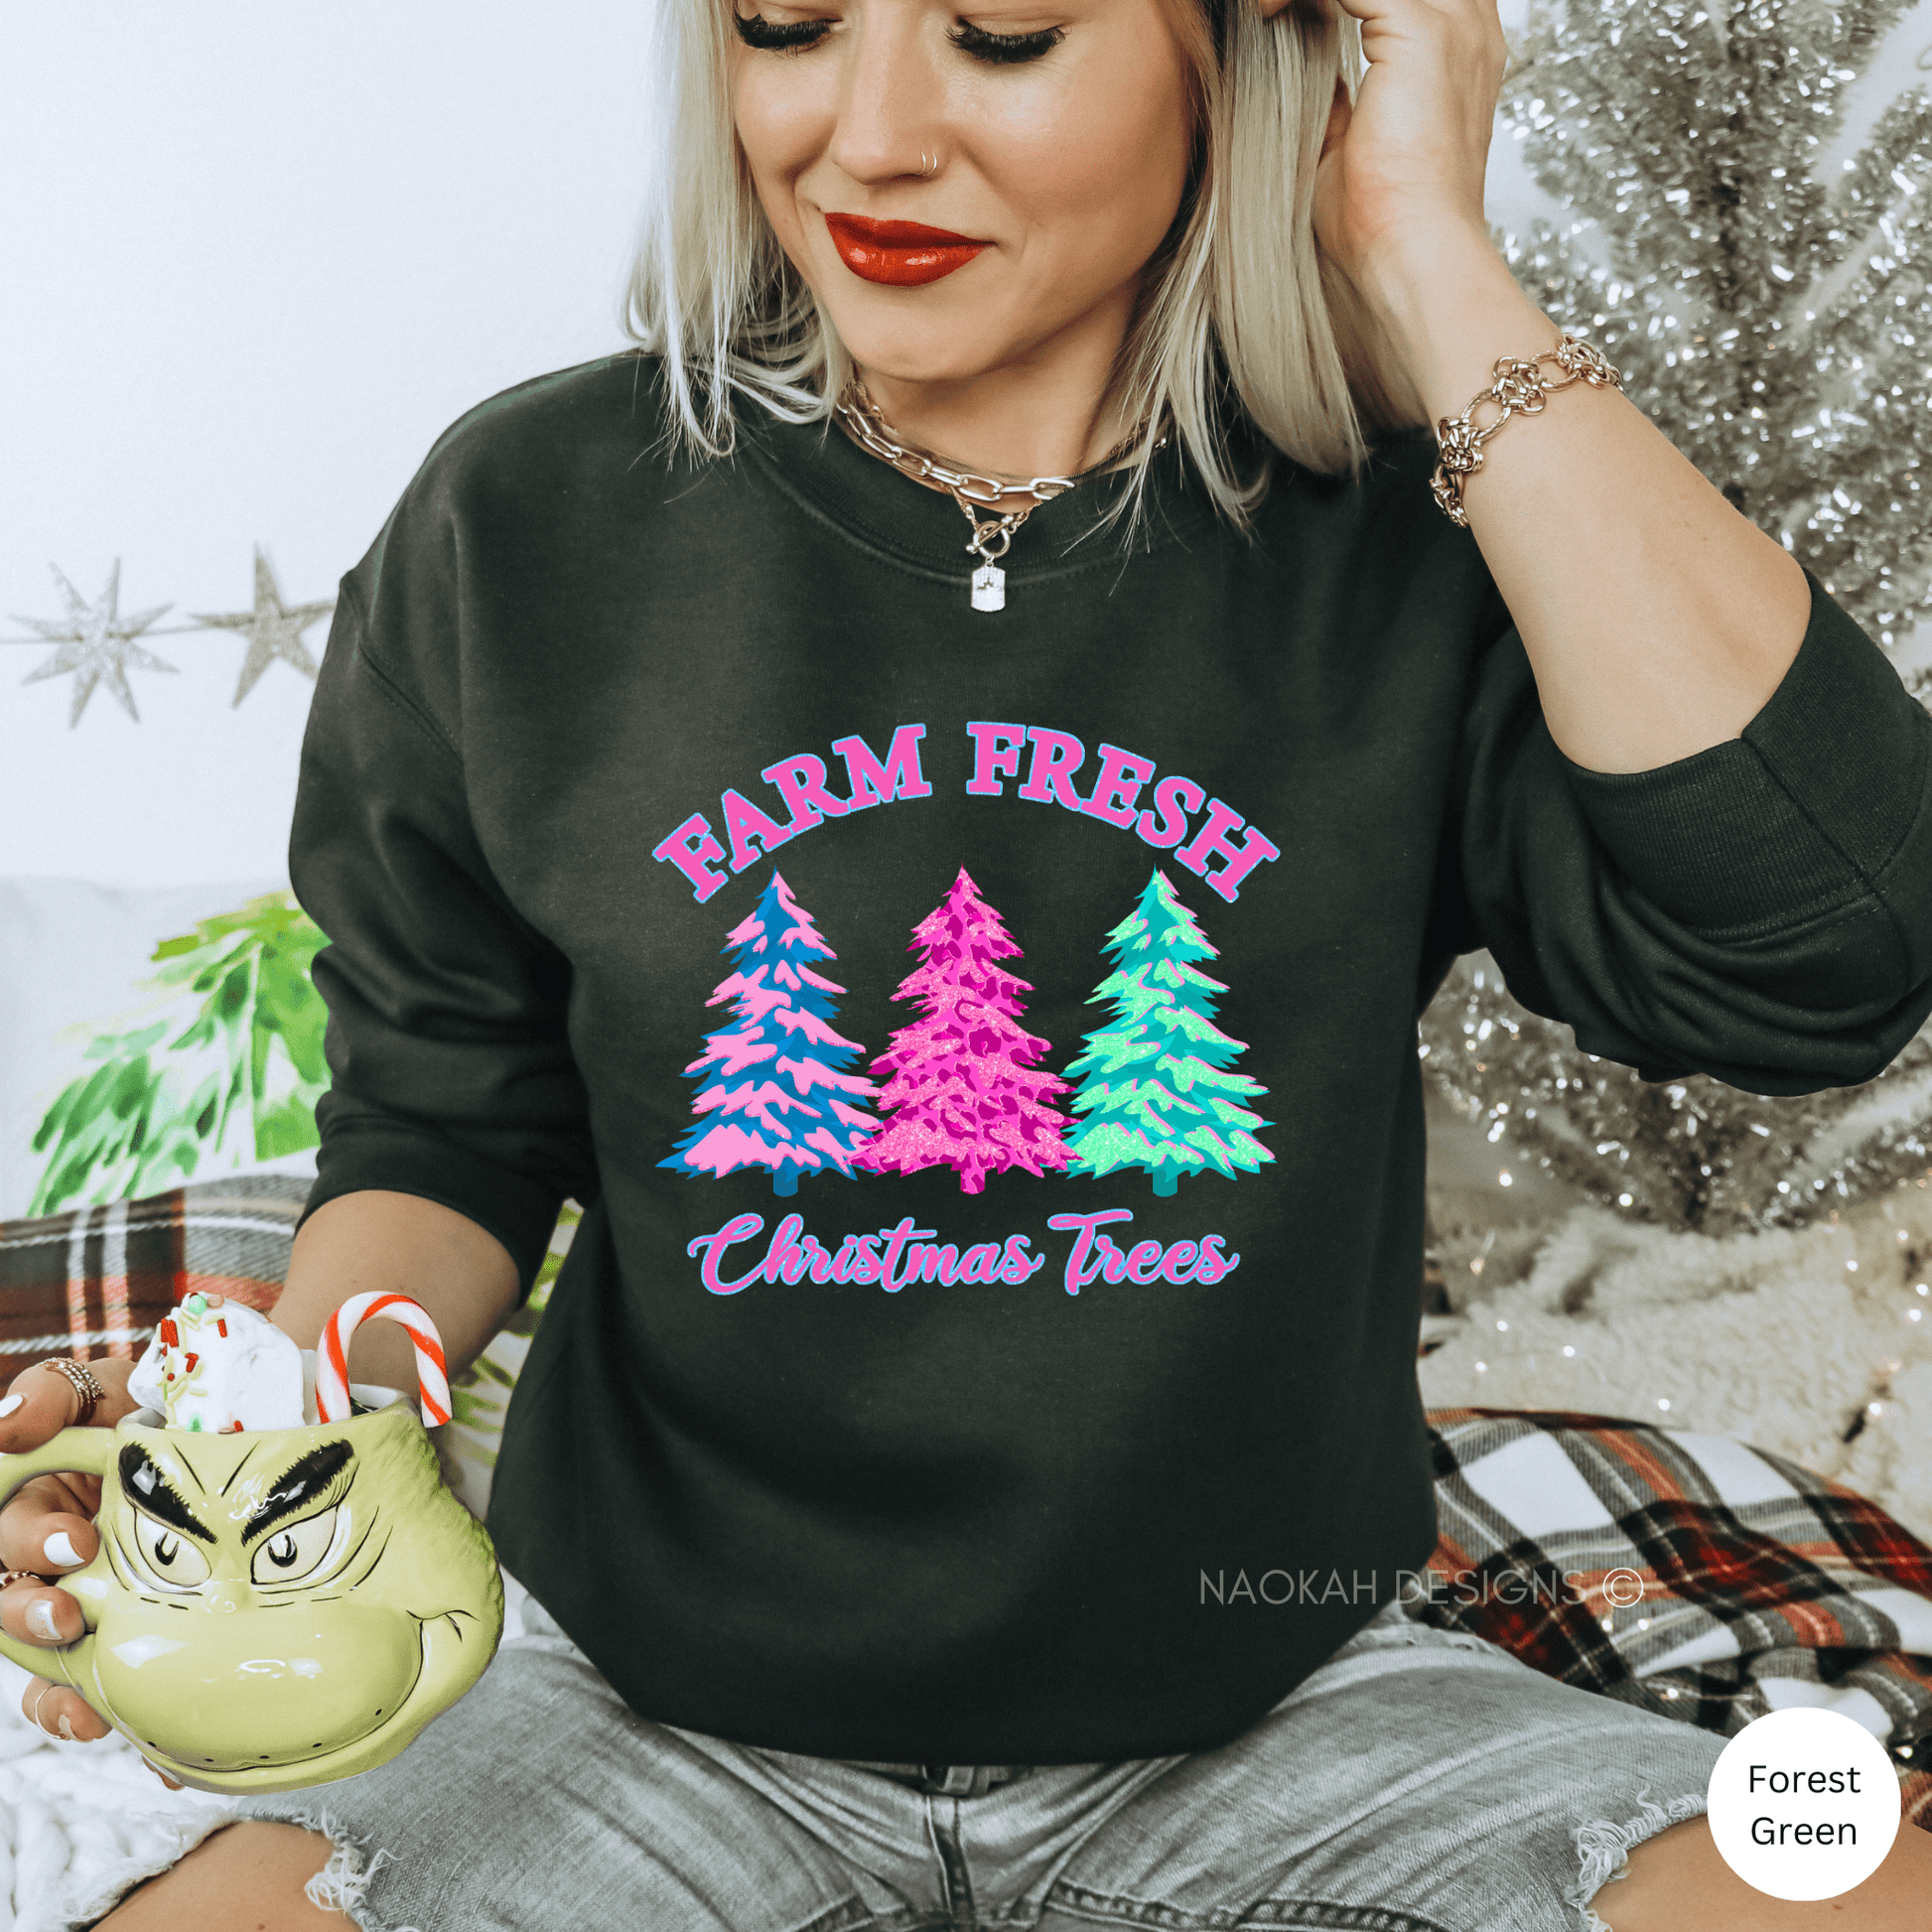 farm fresh Christmas trees pink glitter sweater, farm fresh christmas trees shirt, tree farm sweatshirt, pine fir trees